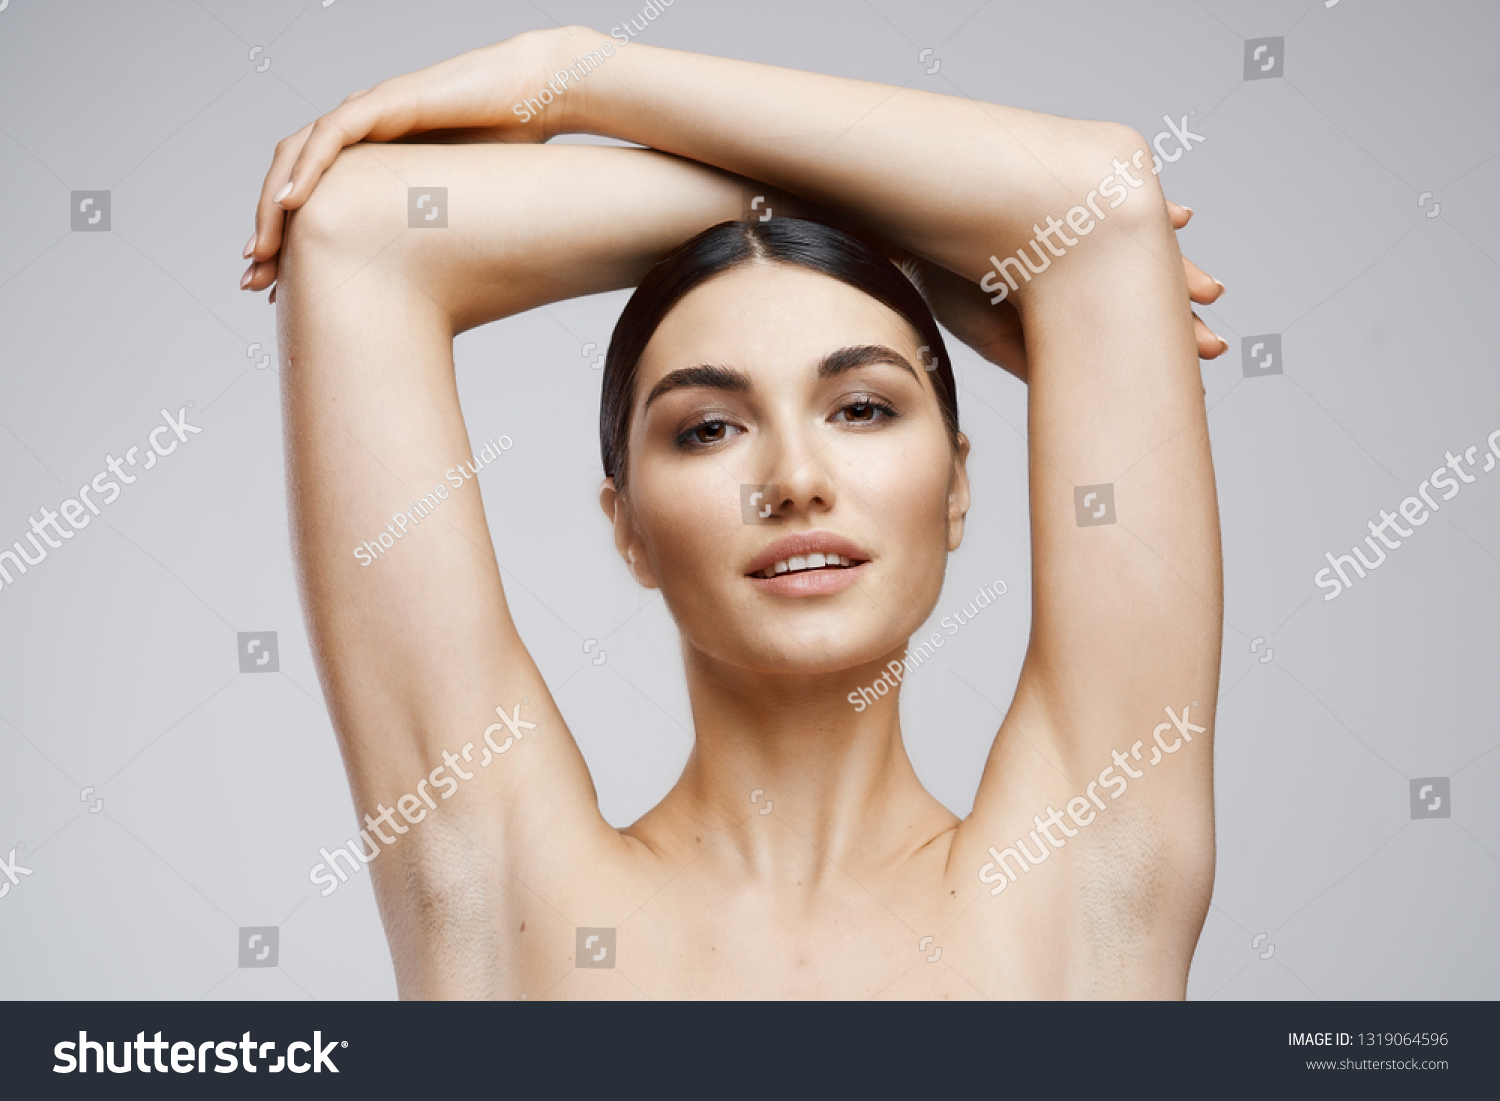 Naked Woman Clean Skin Raised Hands Shutterstock